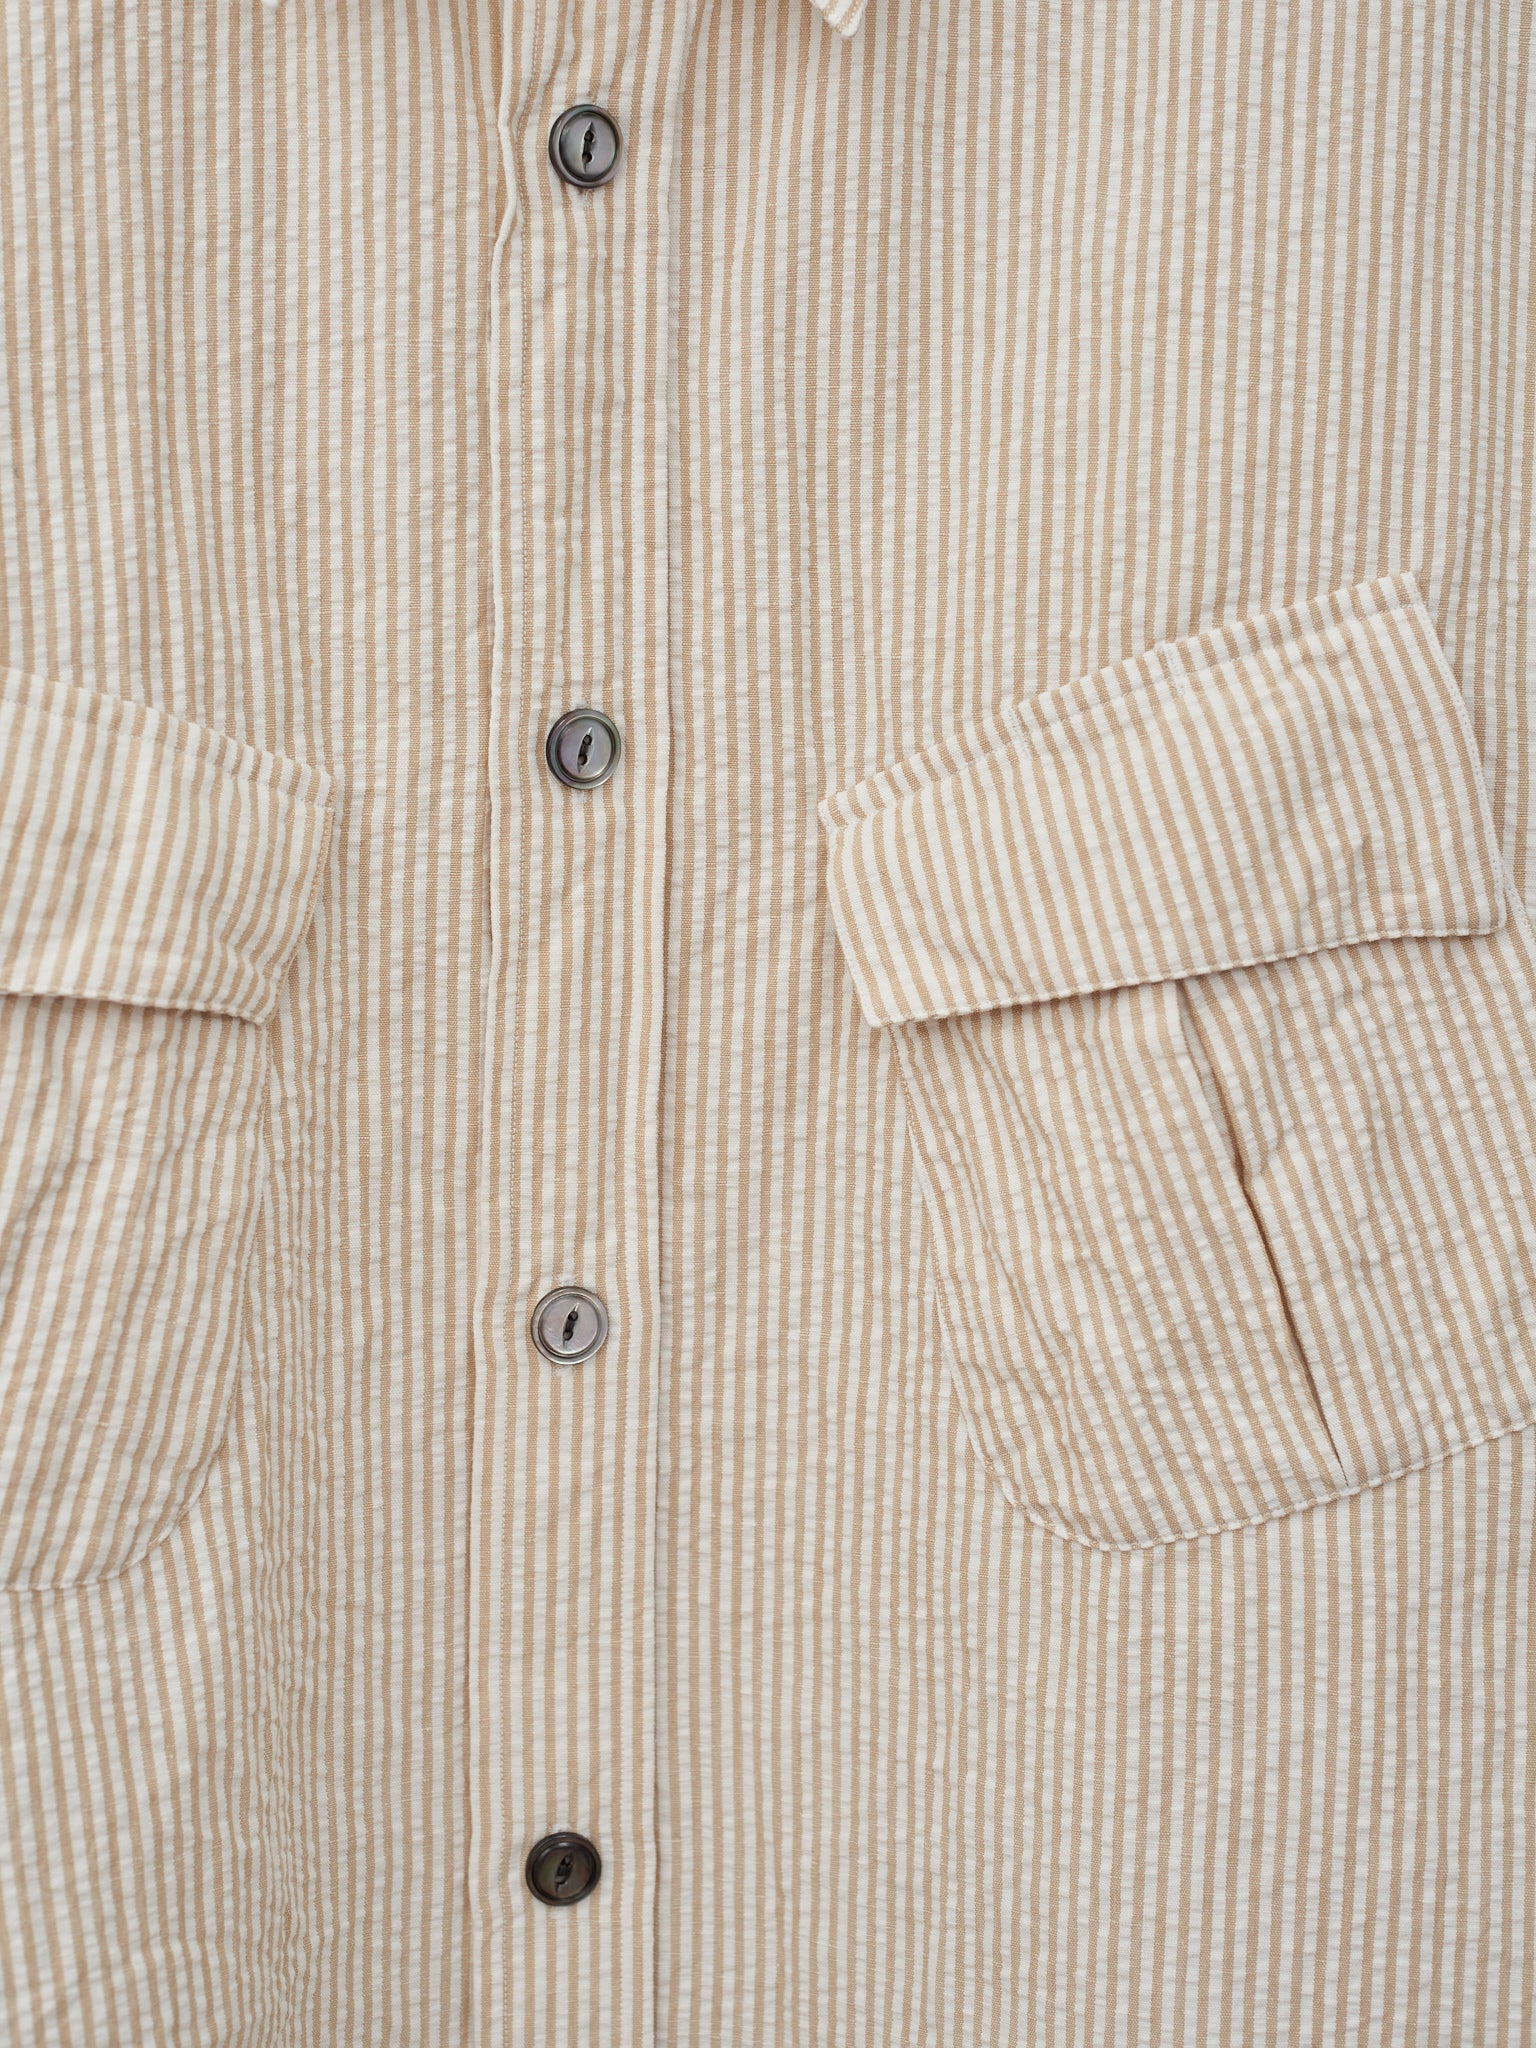 Namu Shop - Fujito S/S Fatigue Shirt - Beige Stripe